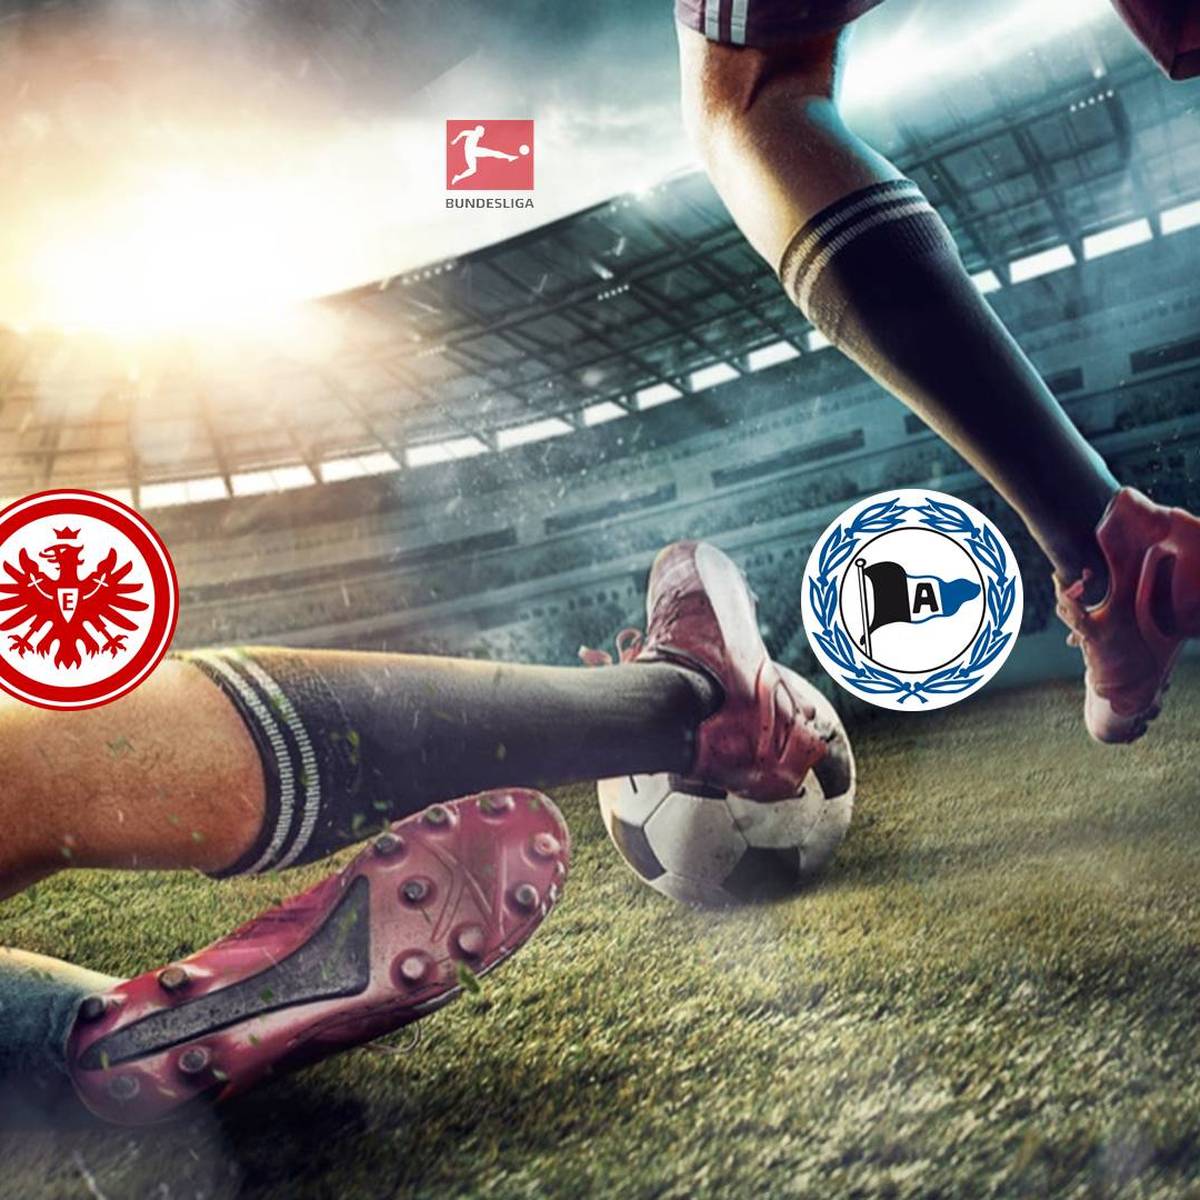 Bundesliga: Eintracht Frankfurt – DSC Arminia Bielefeld, 0:2 (0:2)